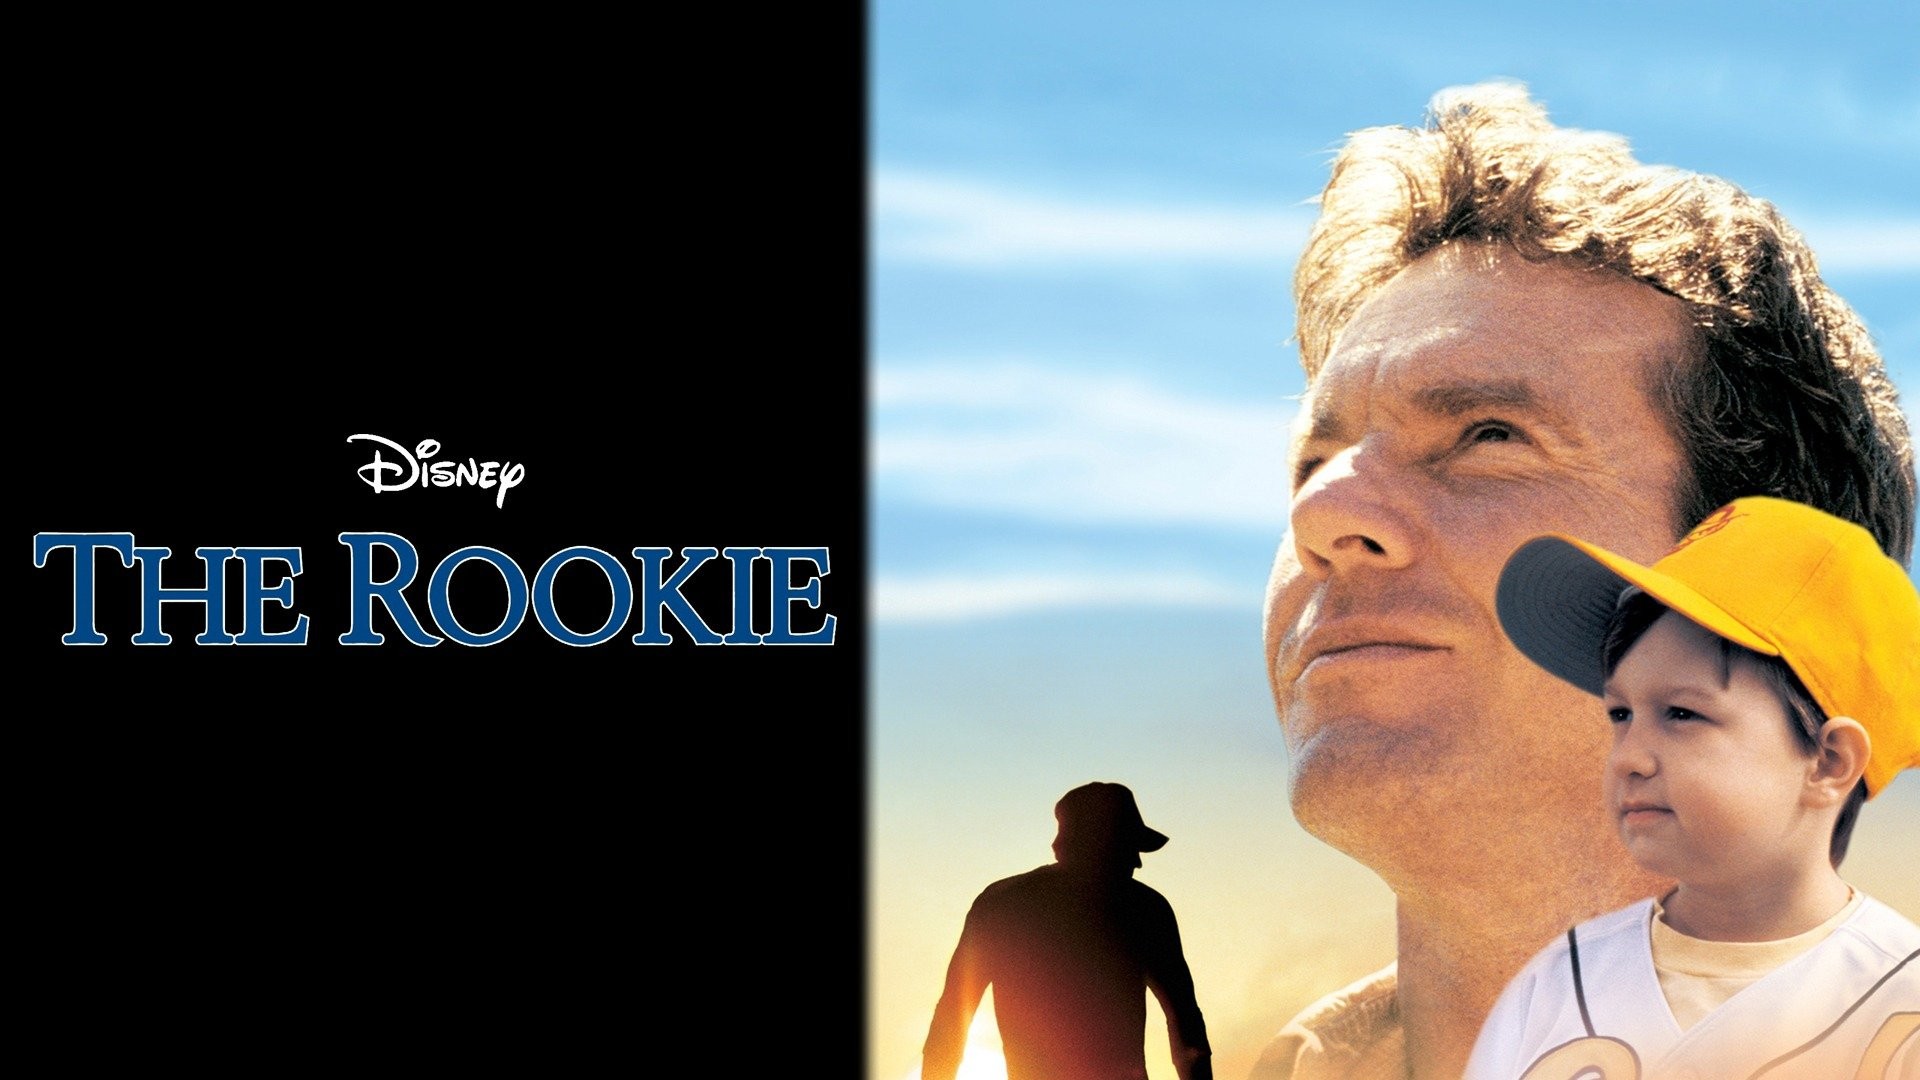 Jim Morris' story stars Dennis Quaid in The Rookie